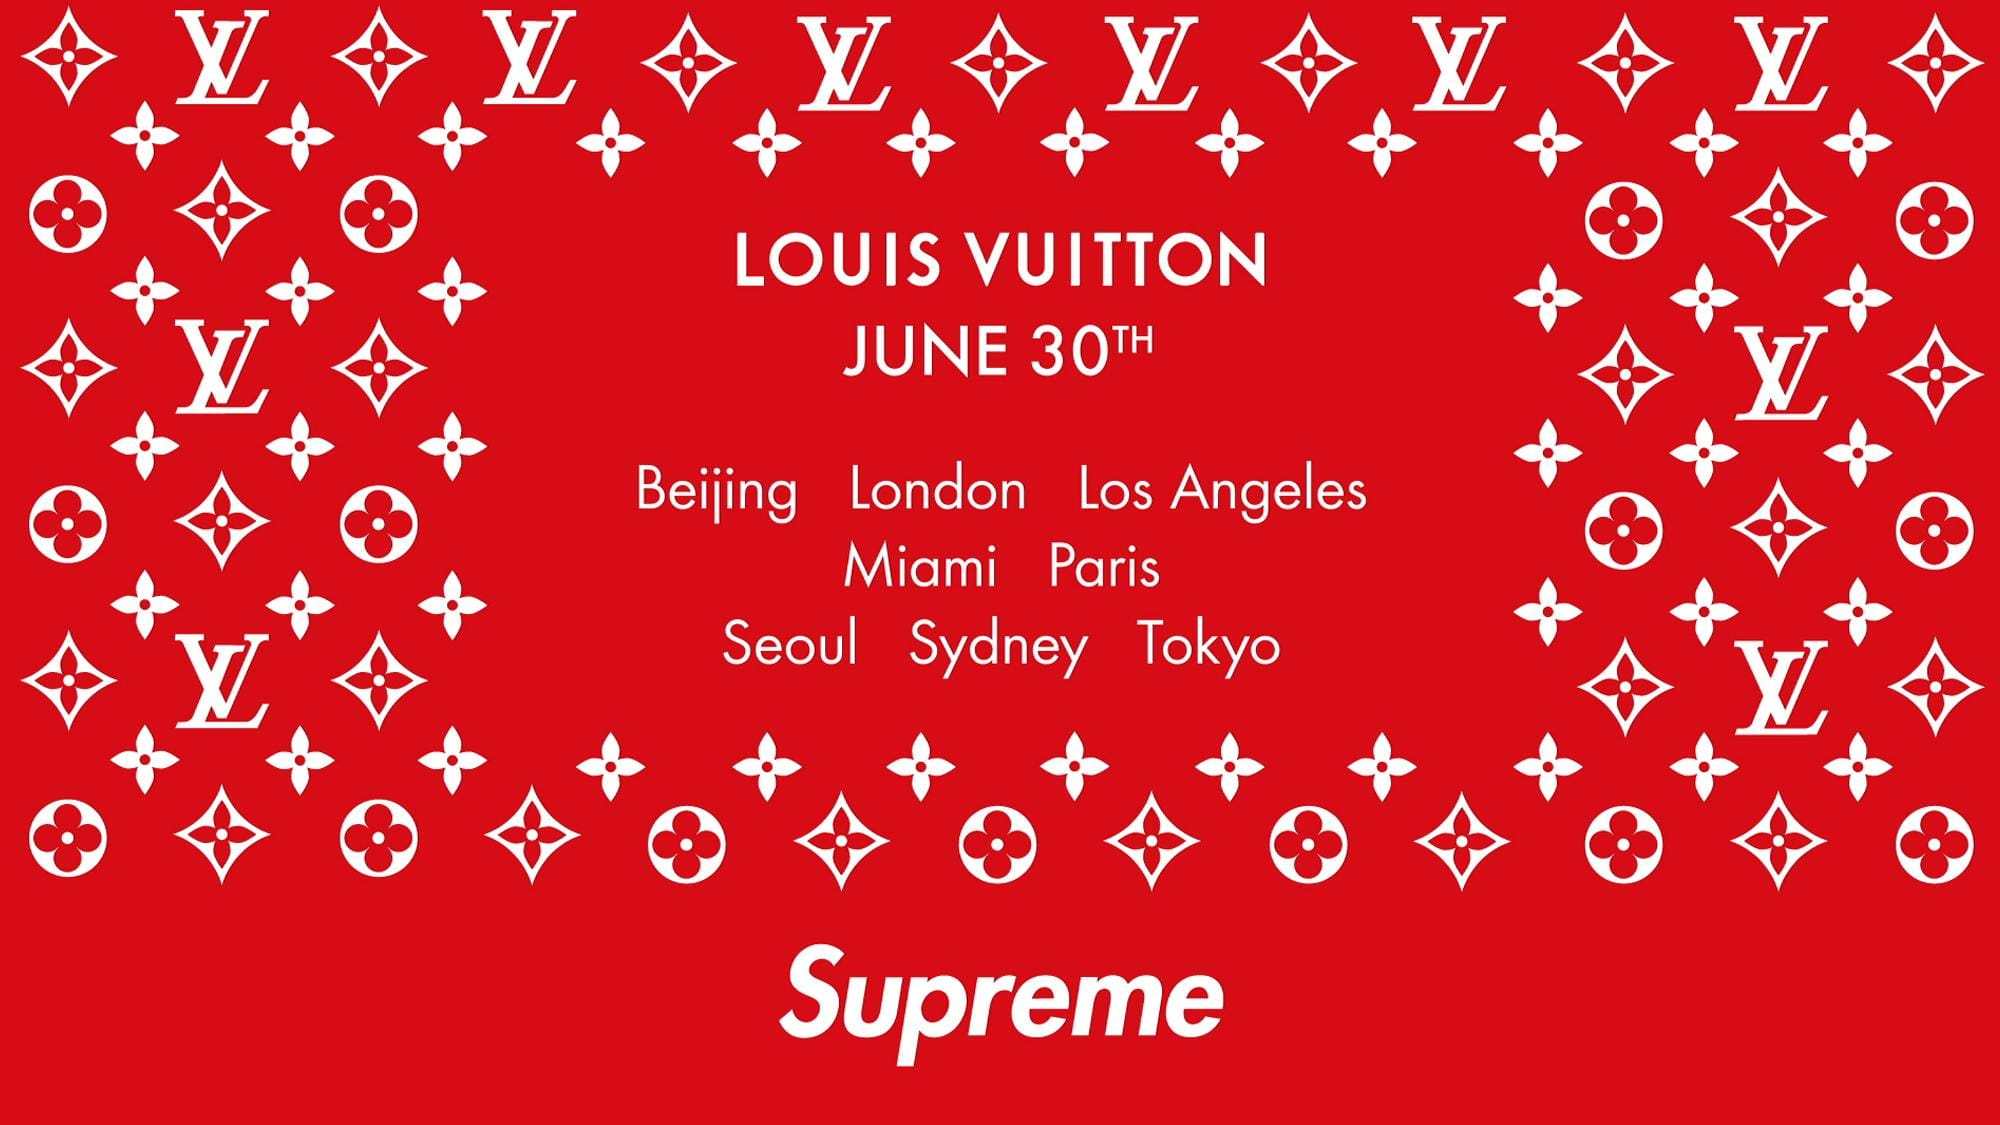 Supreme Louis Vuitton Wallpapers - Wallpaper Cave